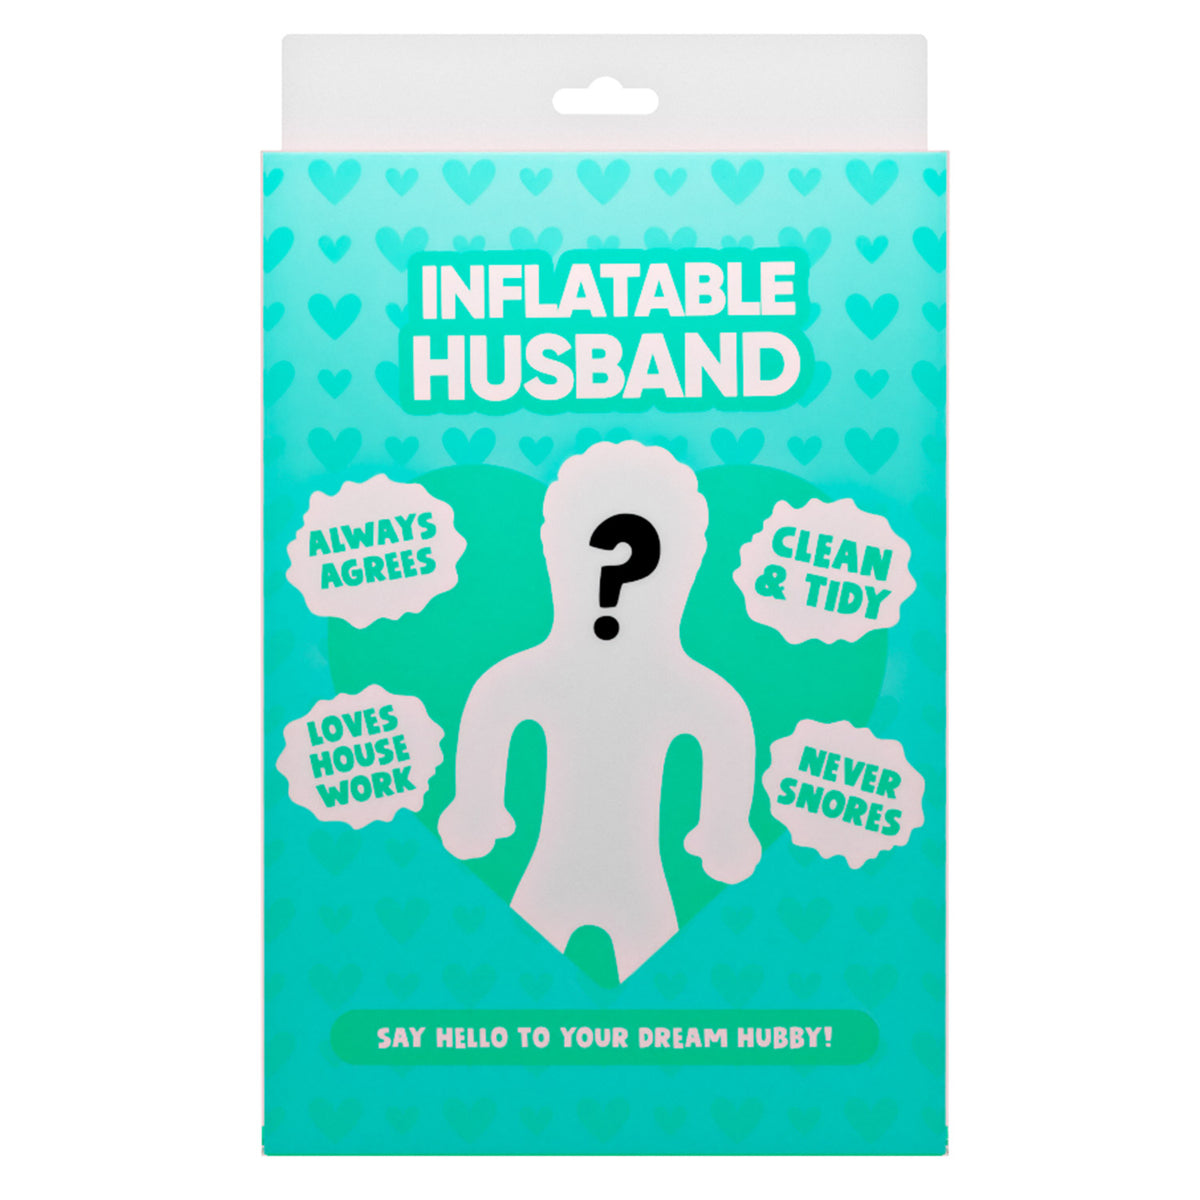 Inflatable Husband Box